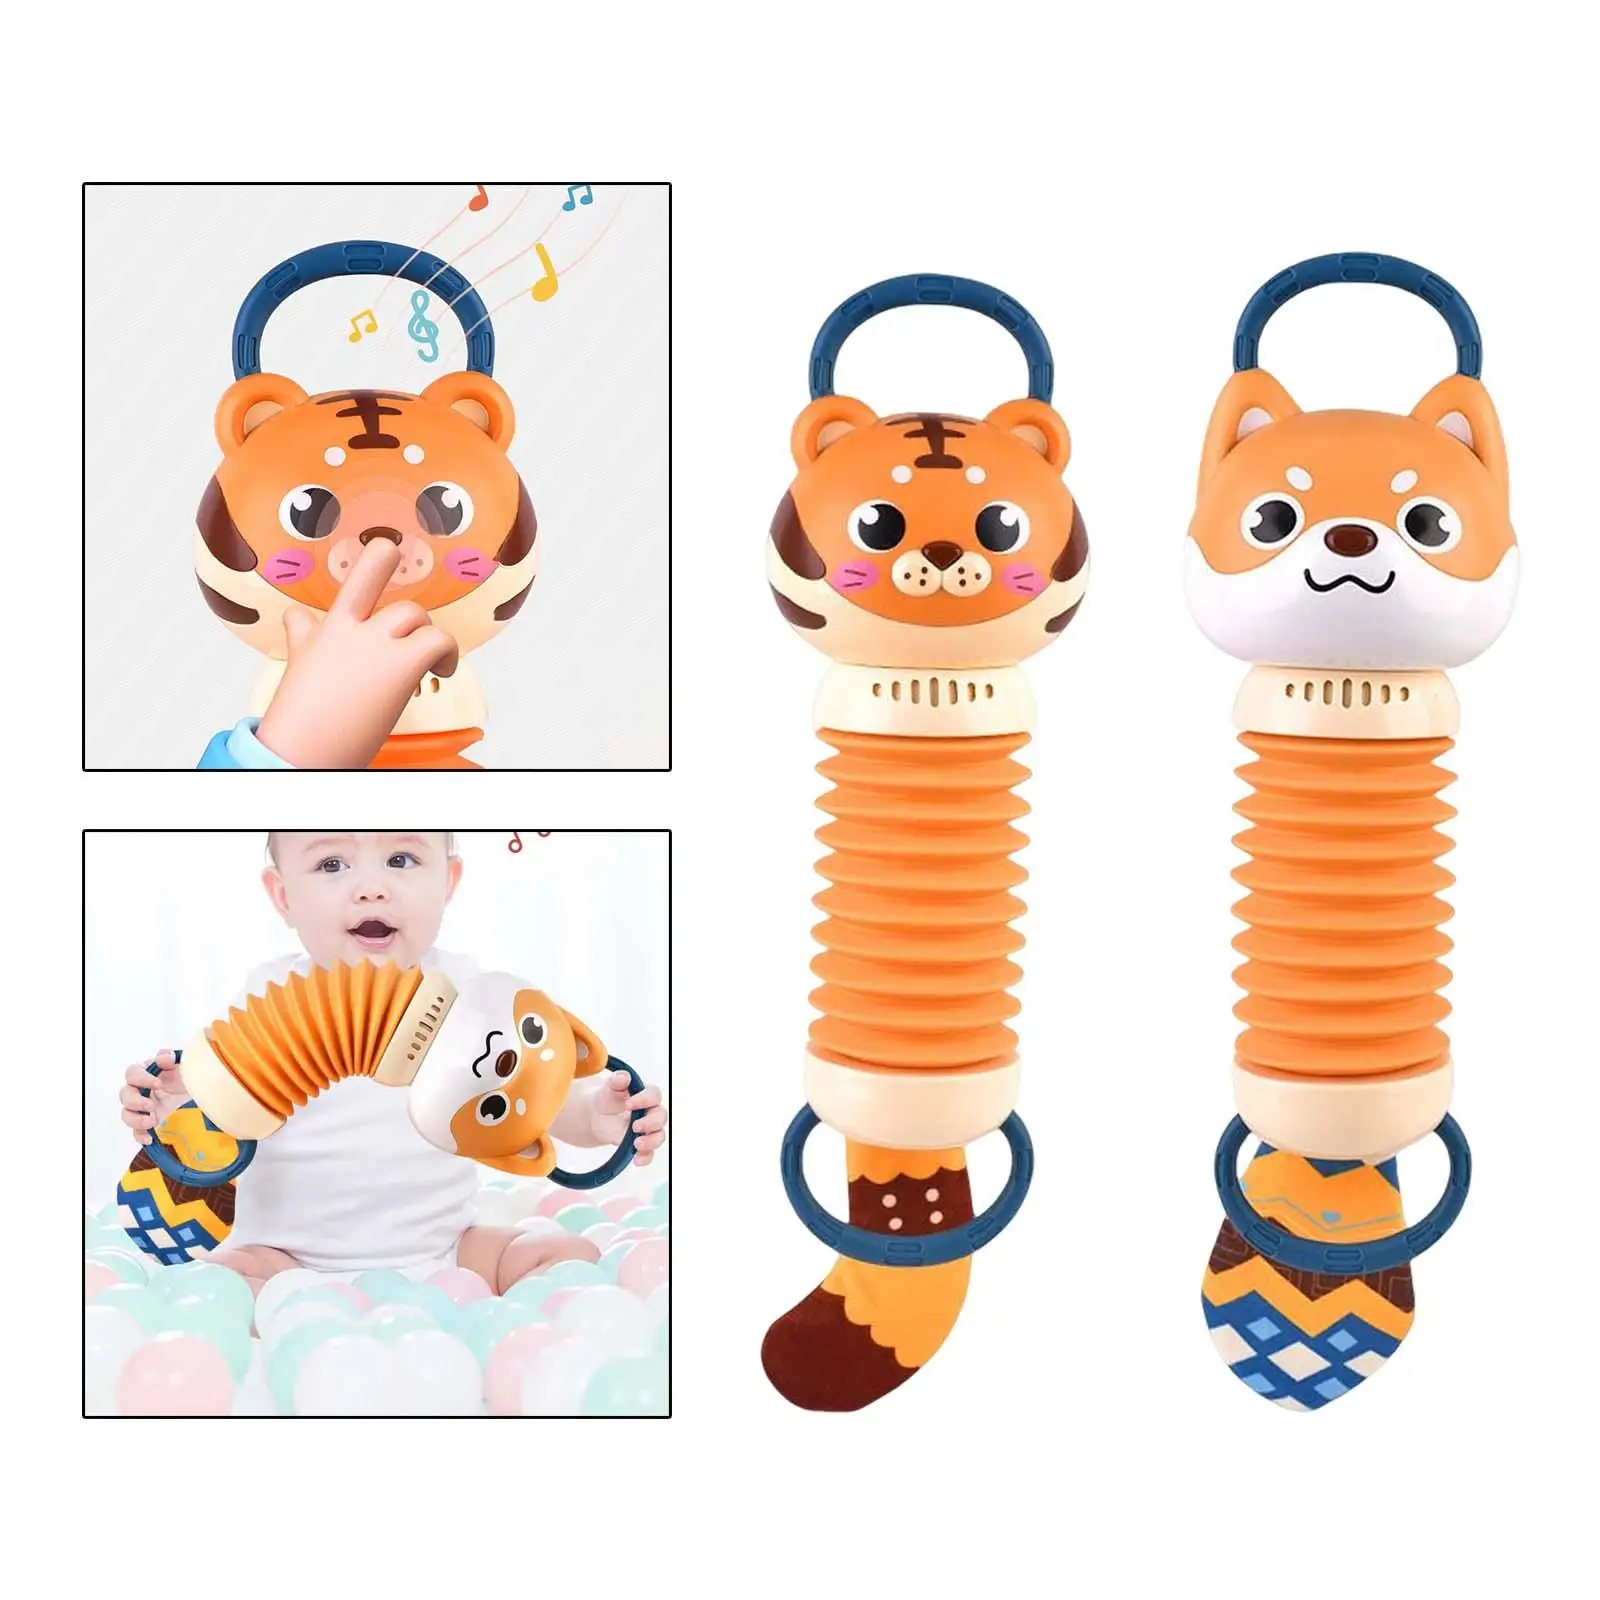 Accordion Toy Rattles Toys Developmental Hand Grip Educational Sensory Toy Soft